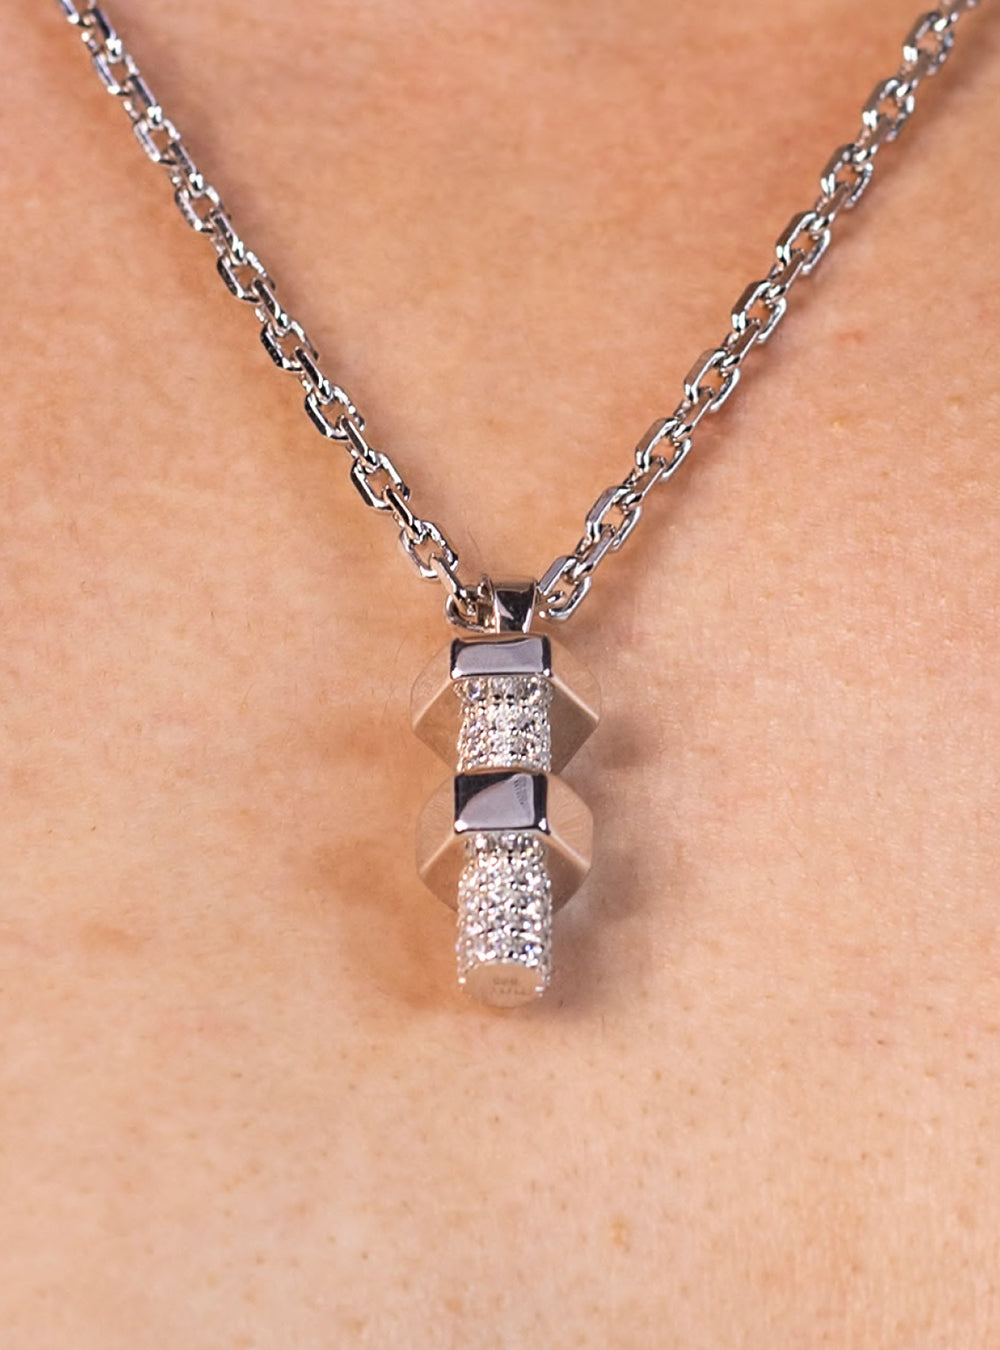 Hexbolt w/ cubic zirconia pendant necklace